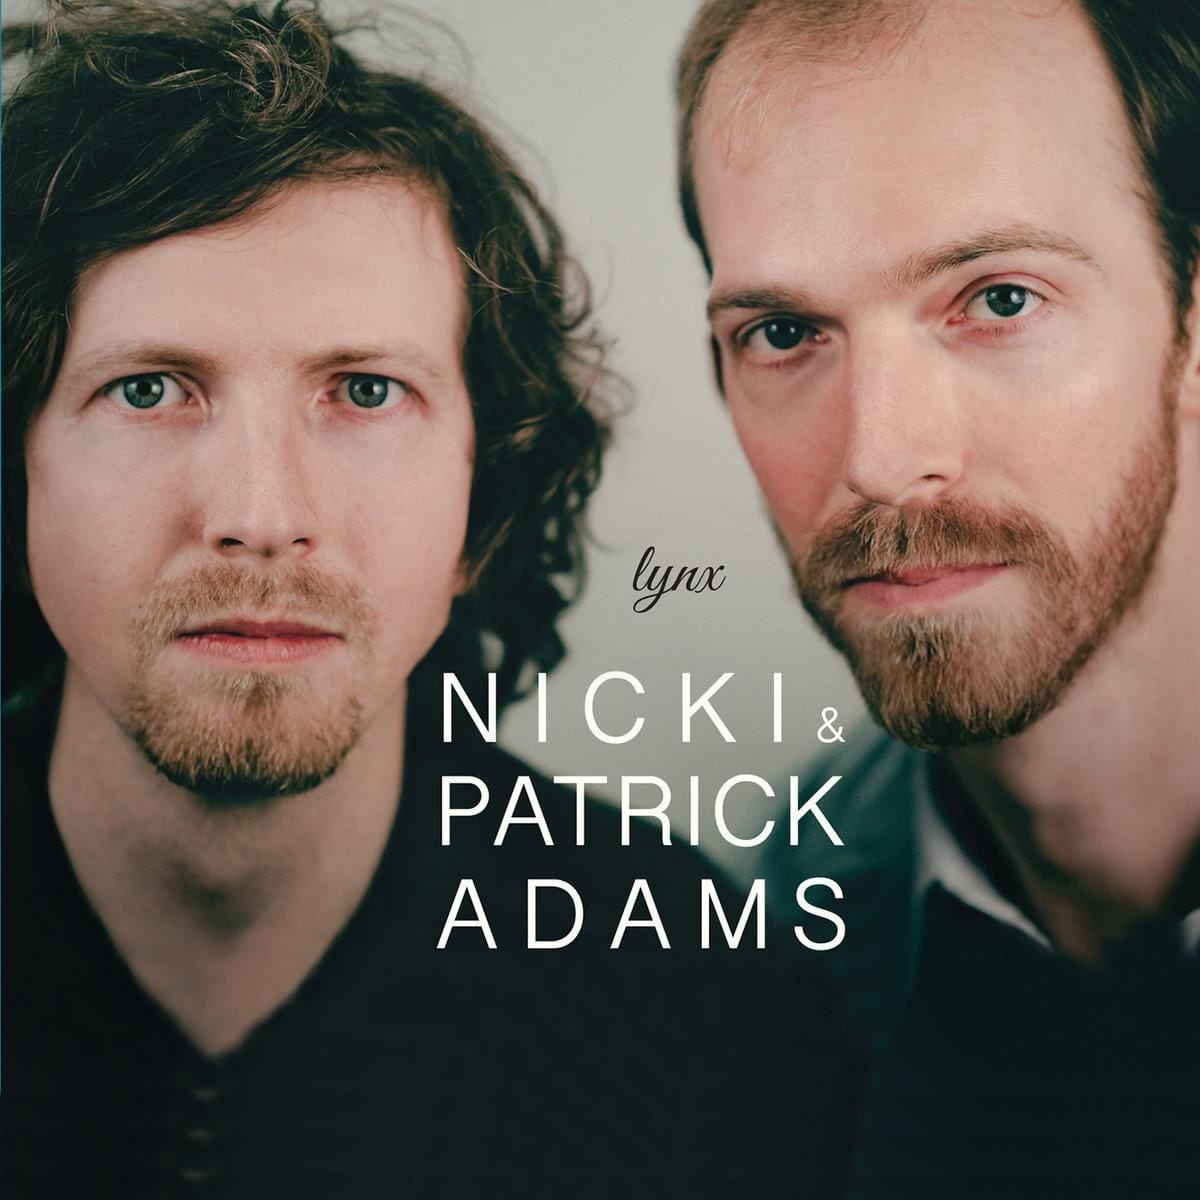 nicki-patrick-adams-lynx-review